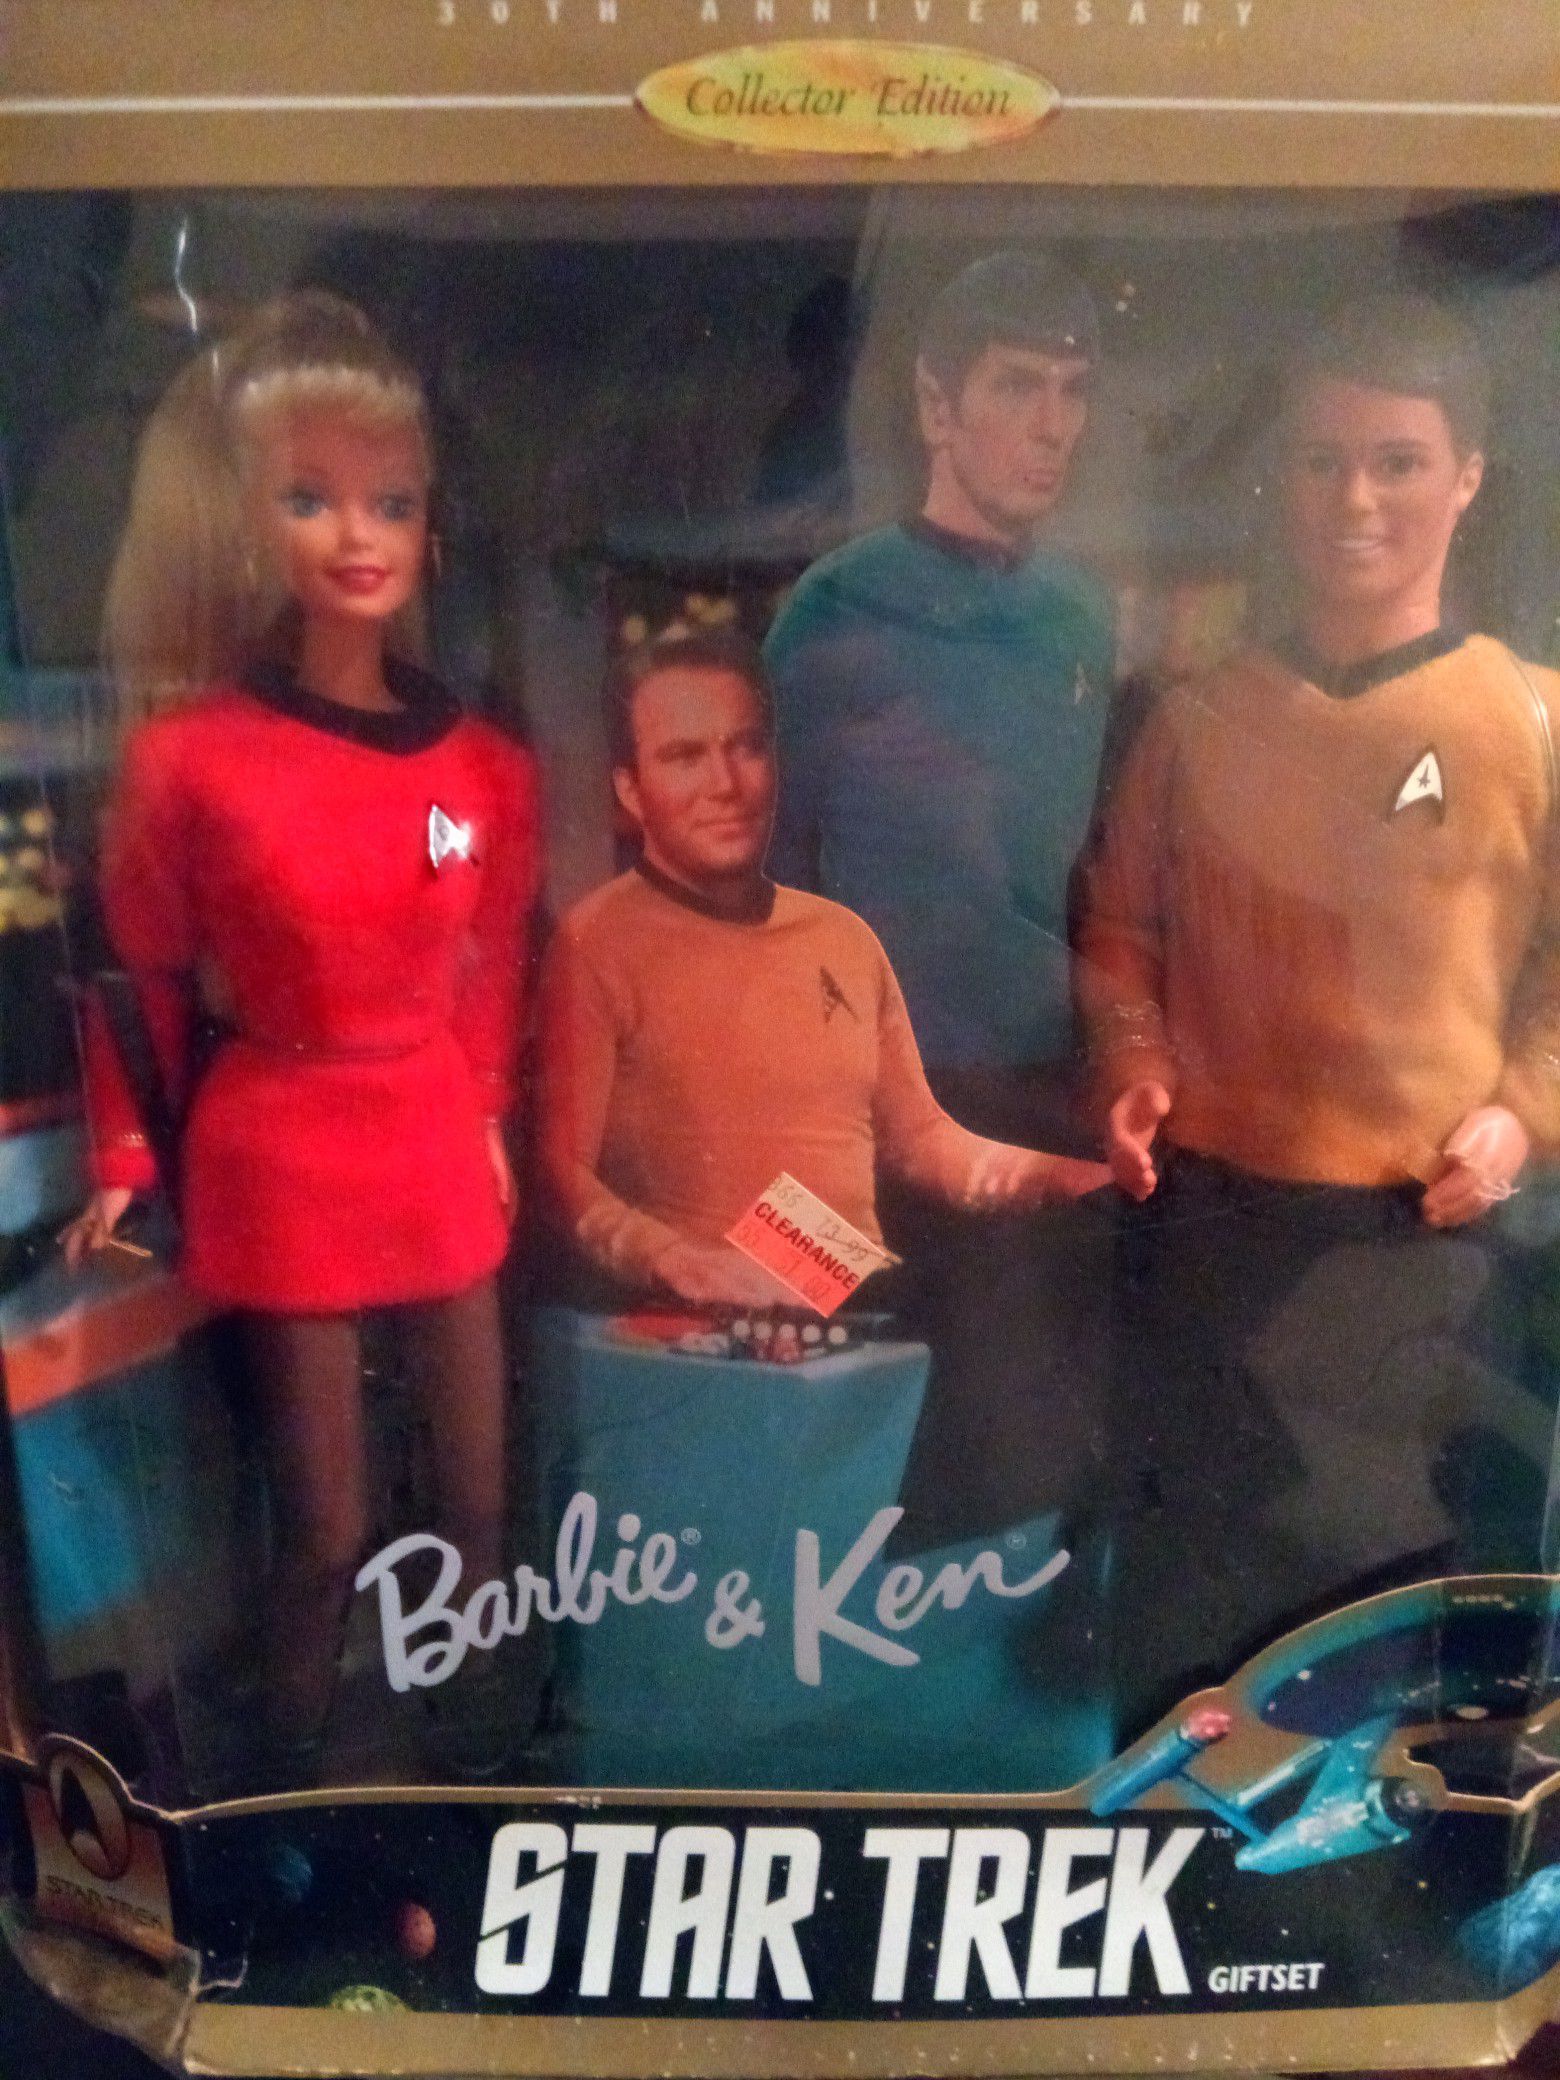 Mattel Star Trek Barbie and Ken. eBay listing$250. 1996 Barbie doll collection